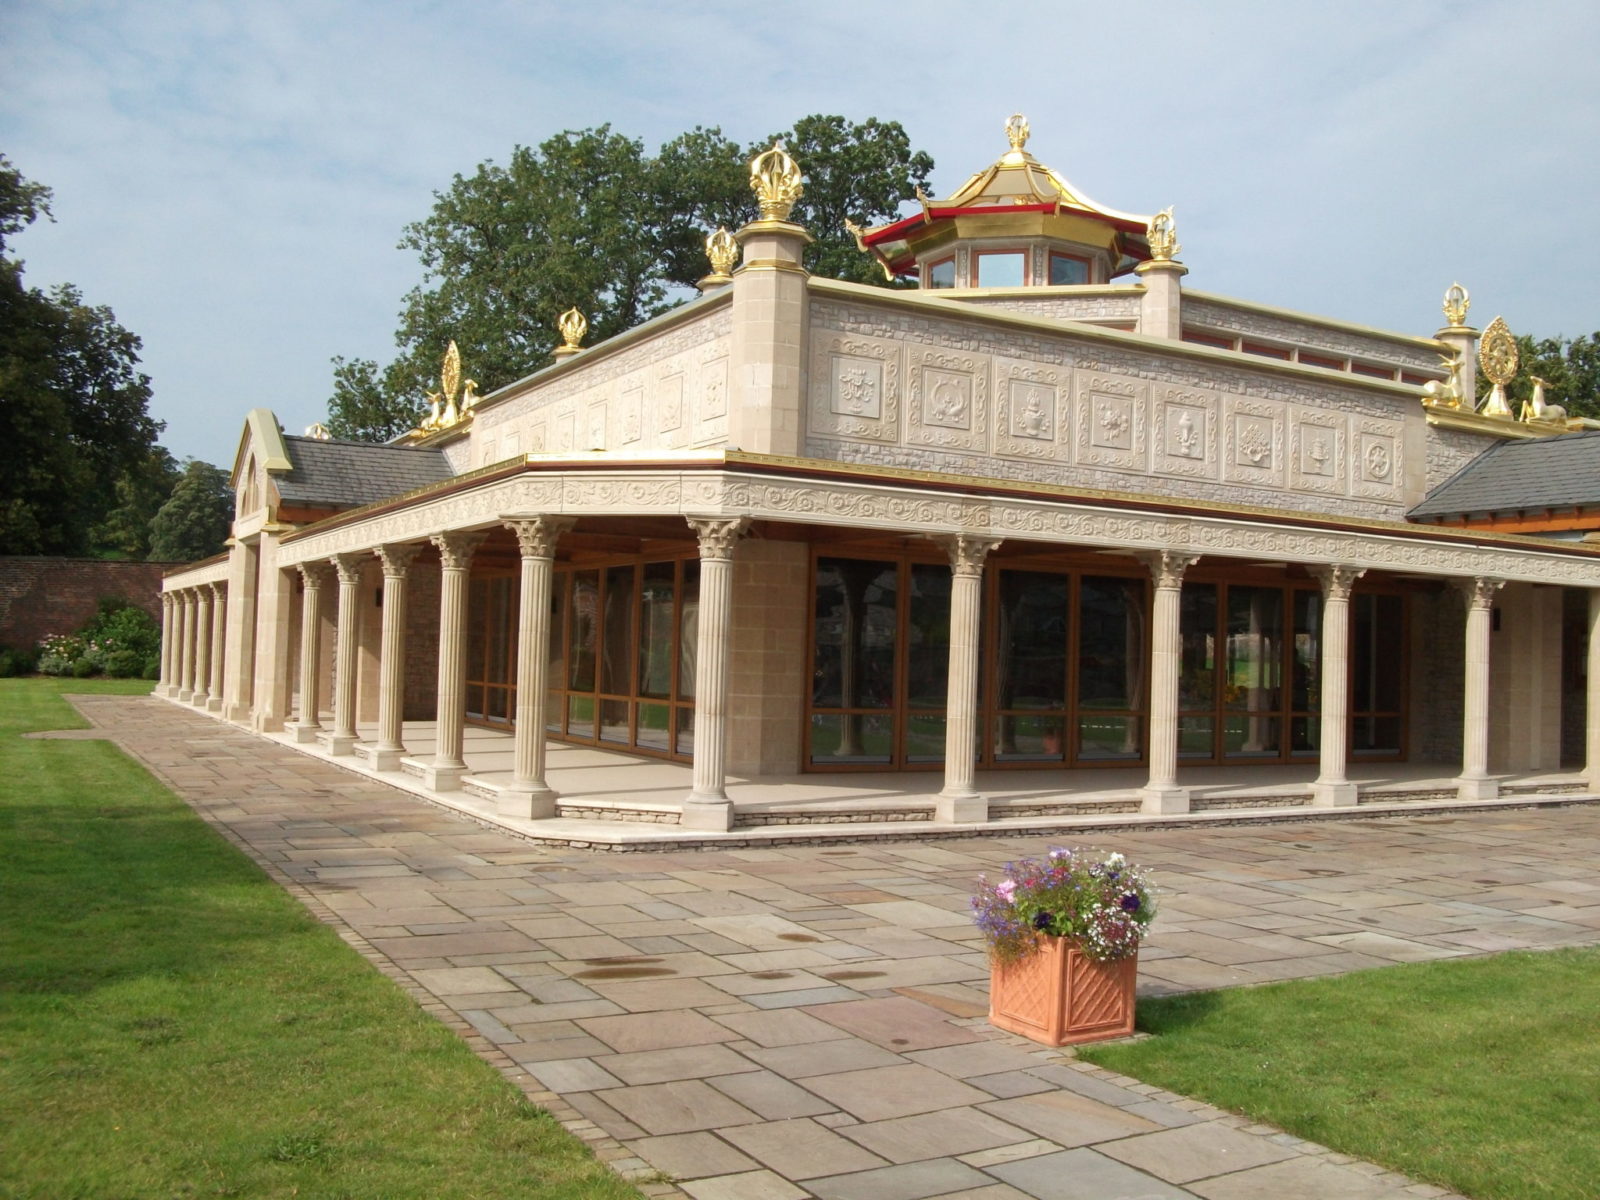 Visit the beautiful Manjushri KMC at Conishead Priory